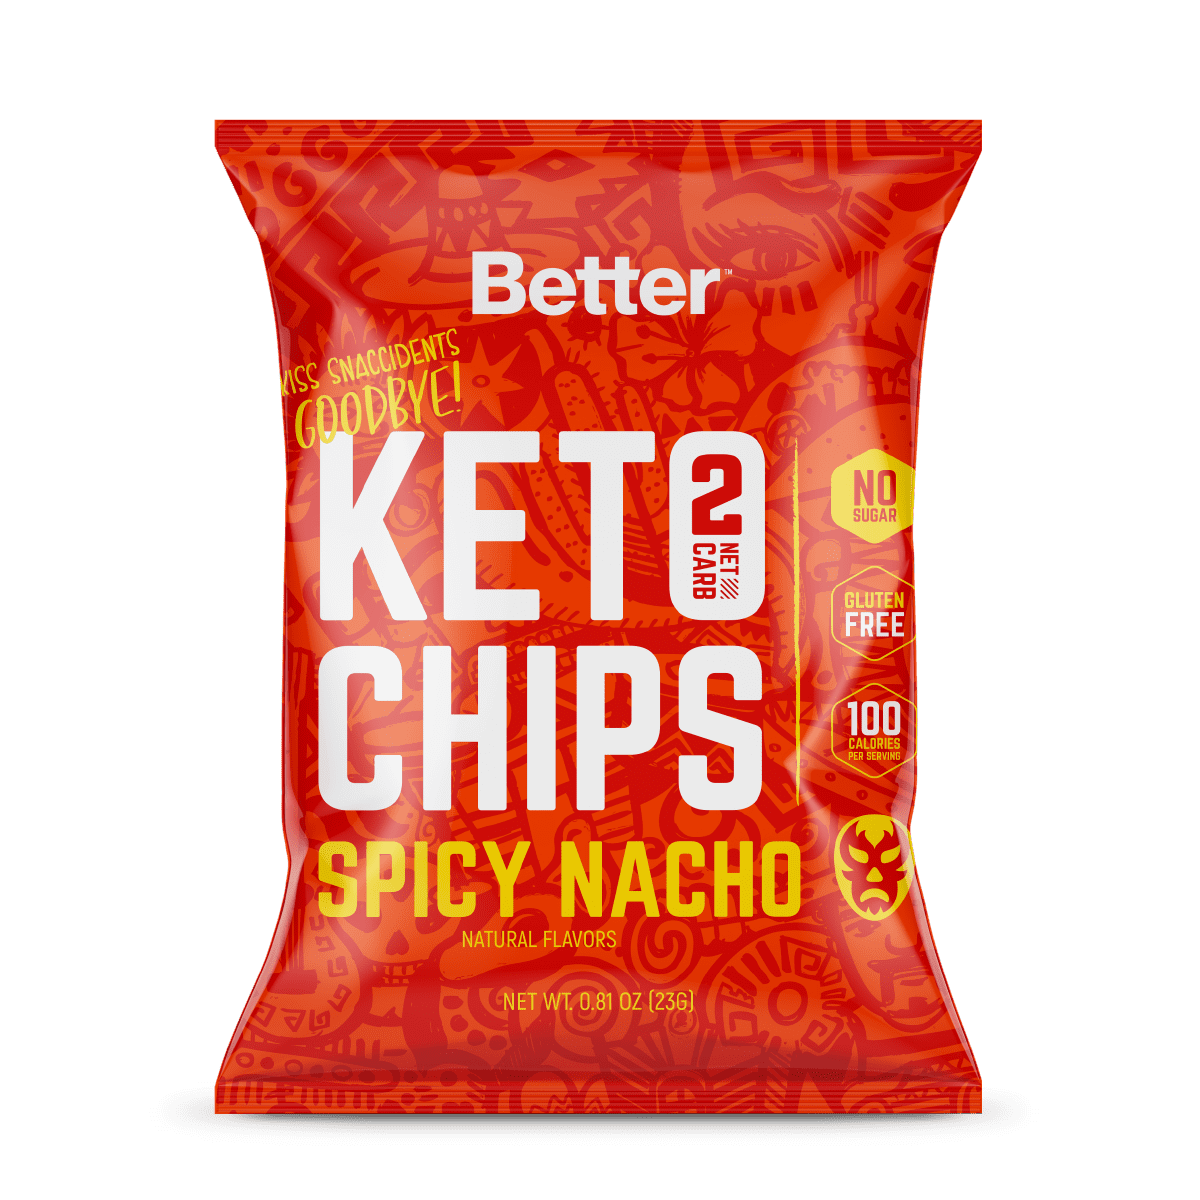 Better Health & Body Keto Chips Spicy Nacho, 6 Count - Walmart.com ...